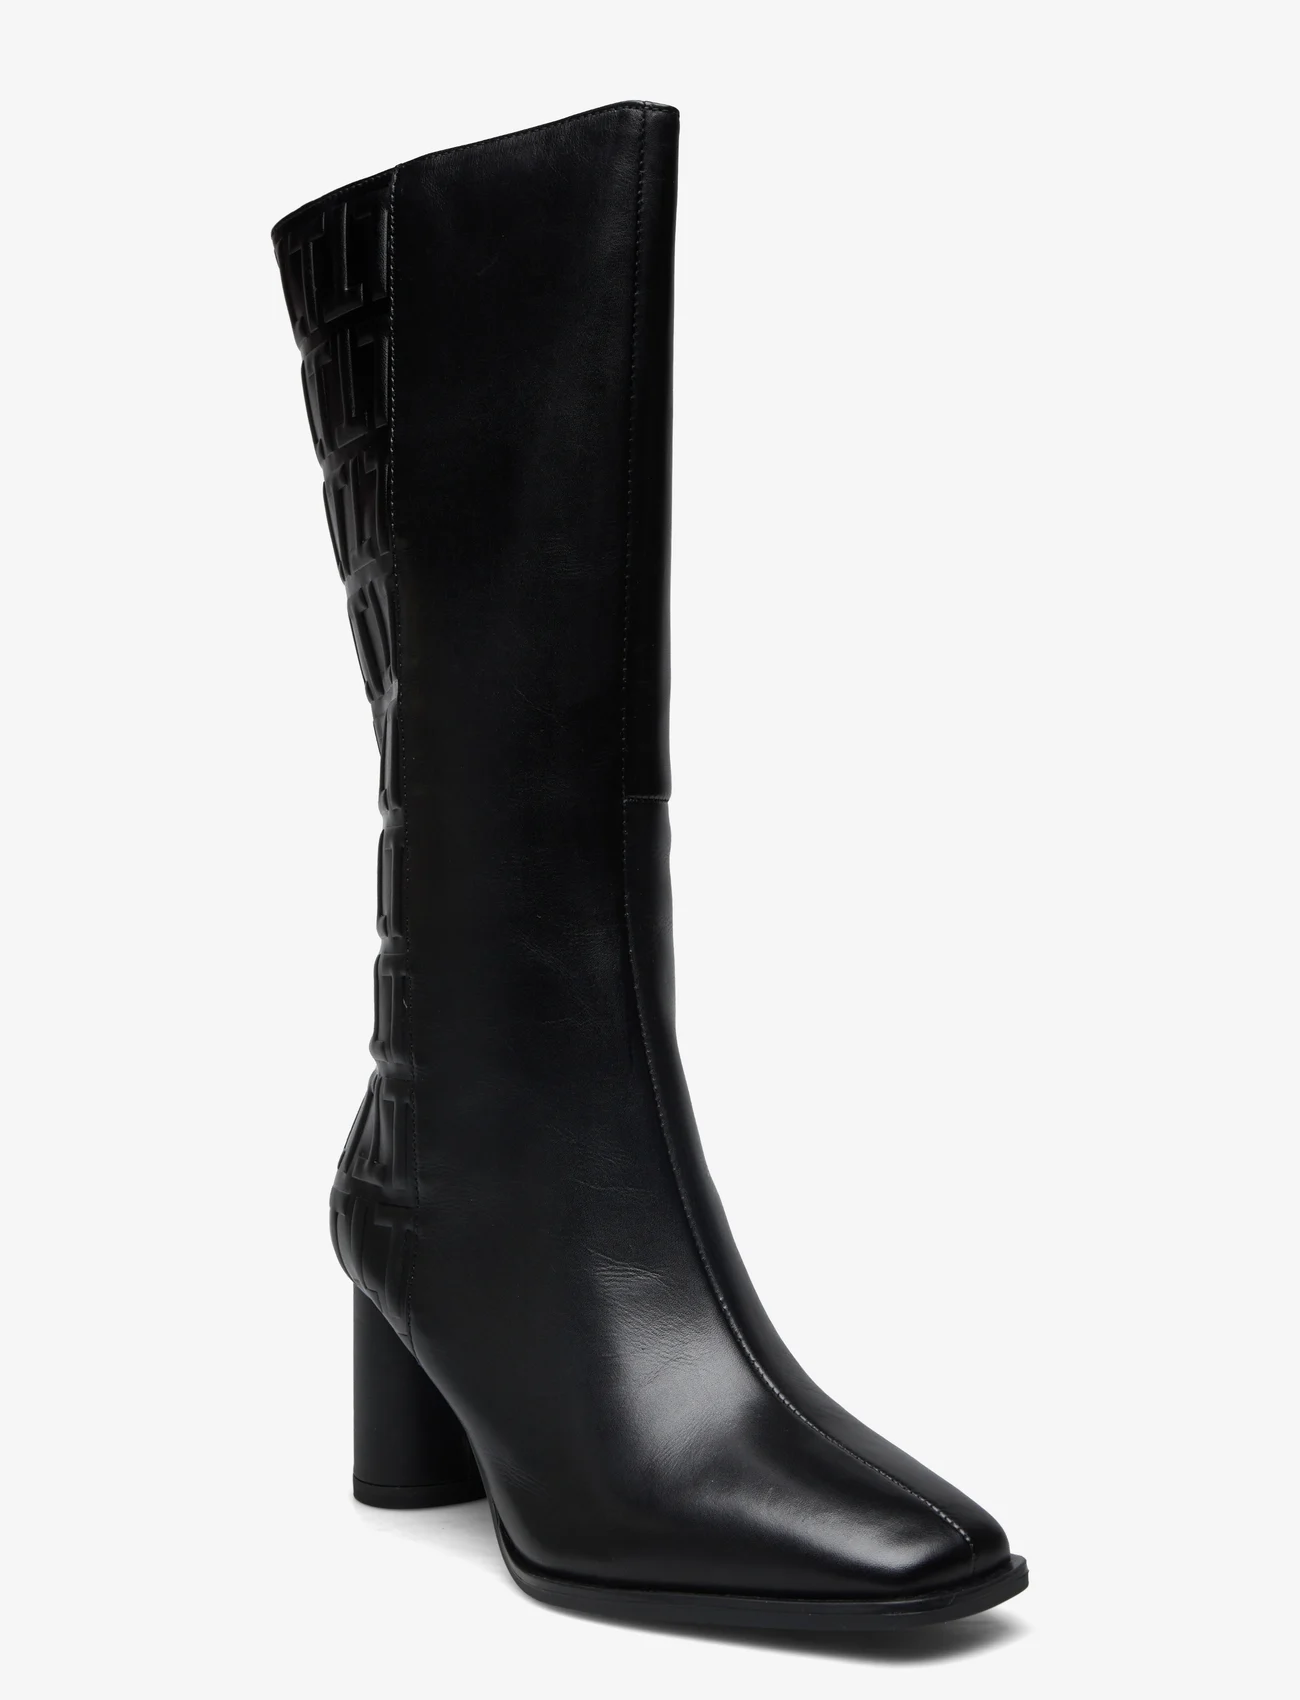 Tamaris - Woms Boots - Lycoris - pitkävartiset saappaat - black - 0